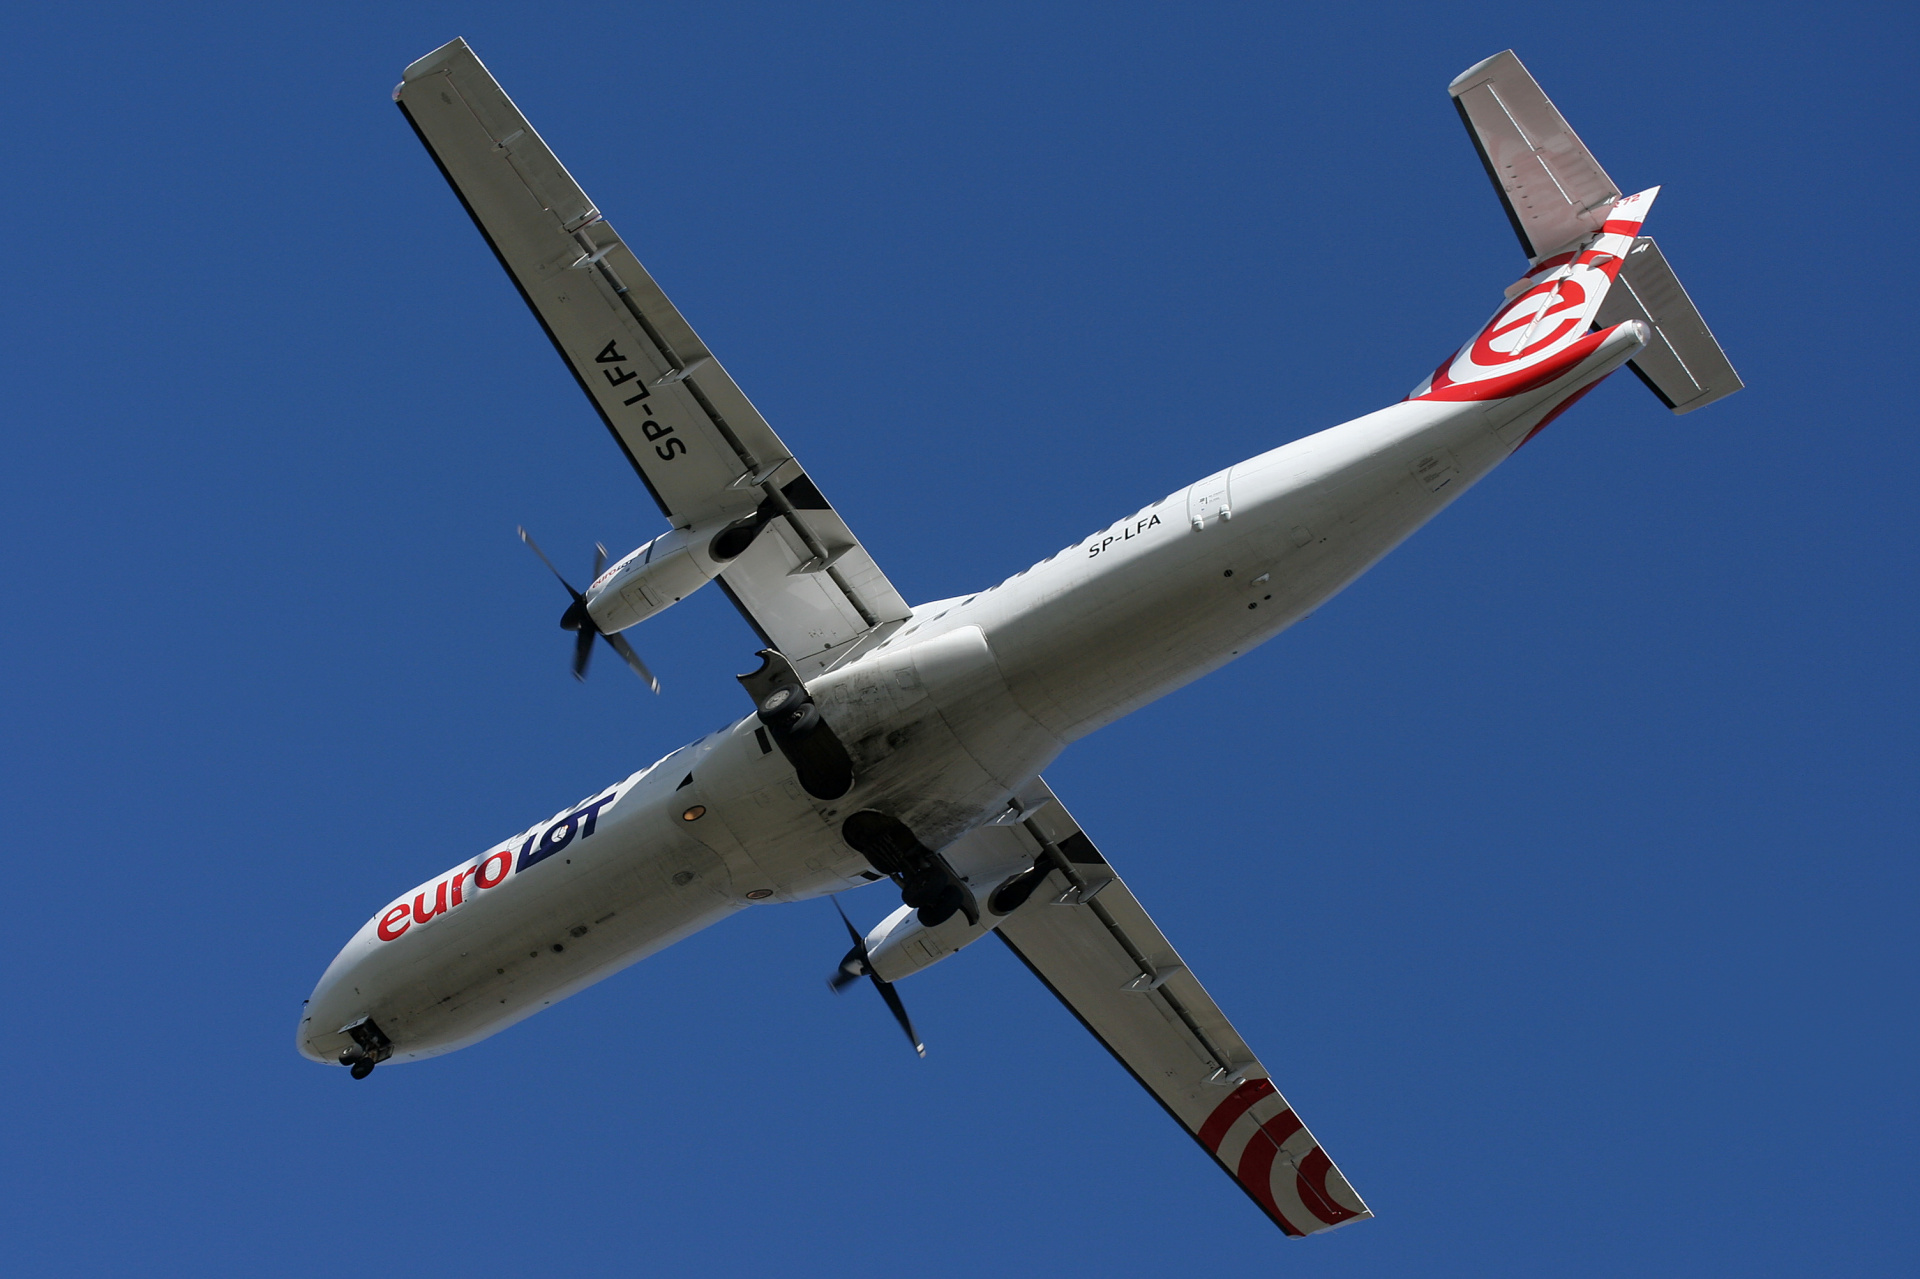 SP-LFA (Samoloty » Spotting na EPWA » ATR 72 » EuroLOT)